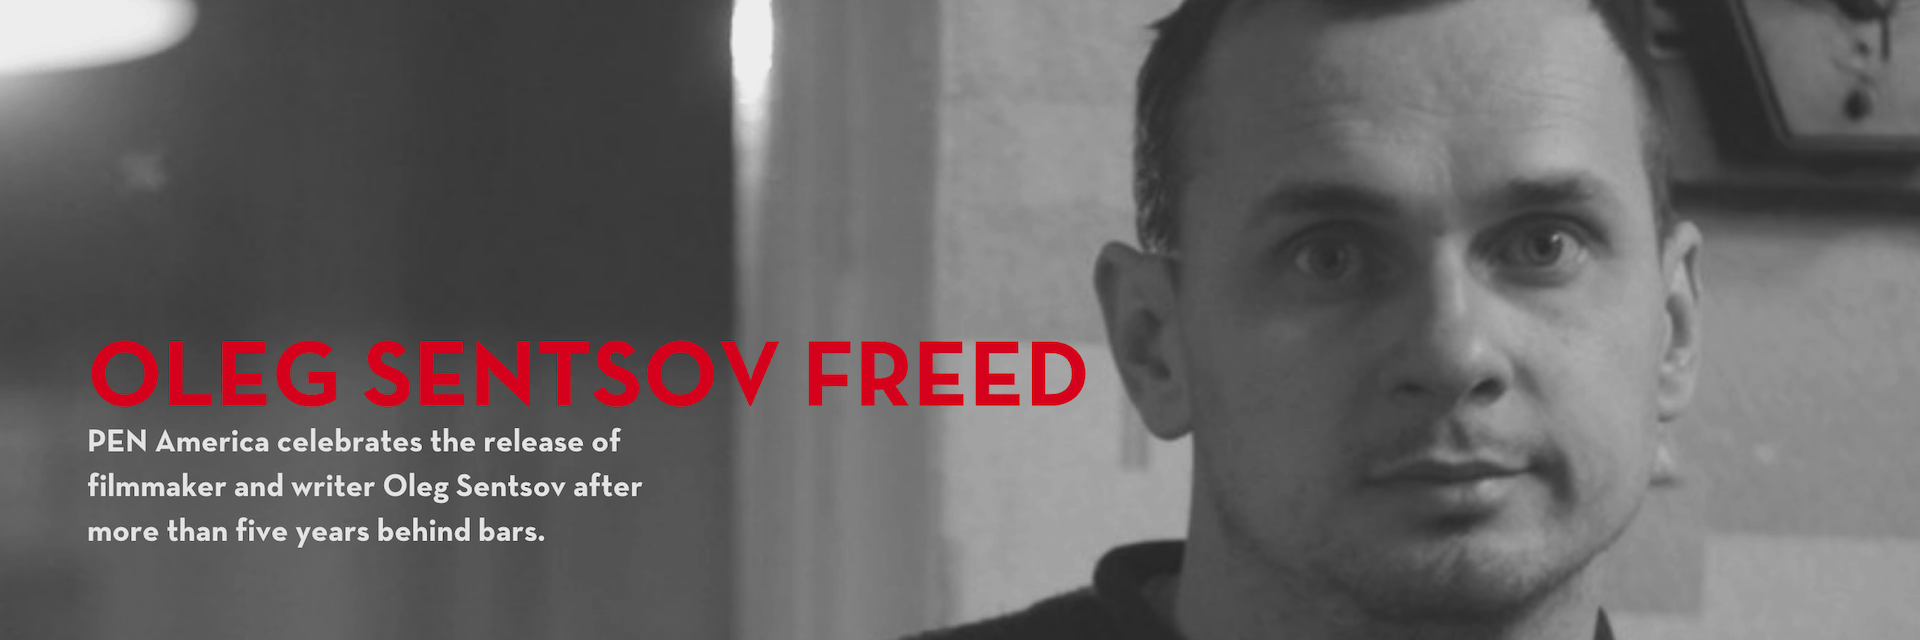 Oleg Sentsov freed